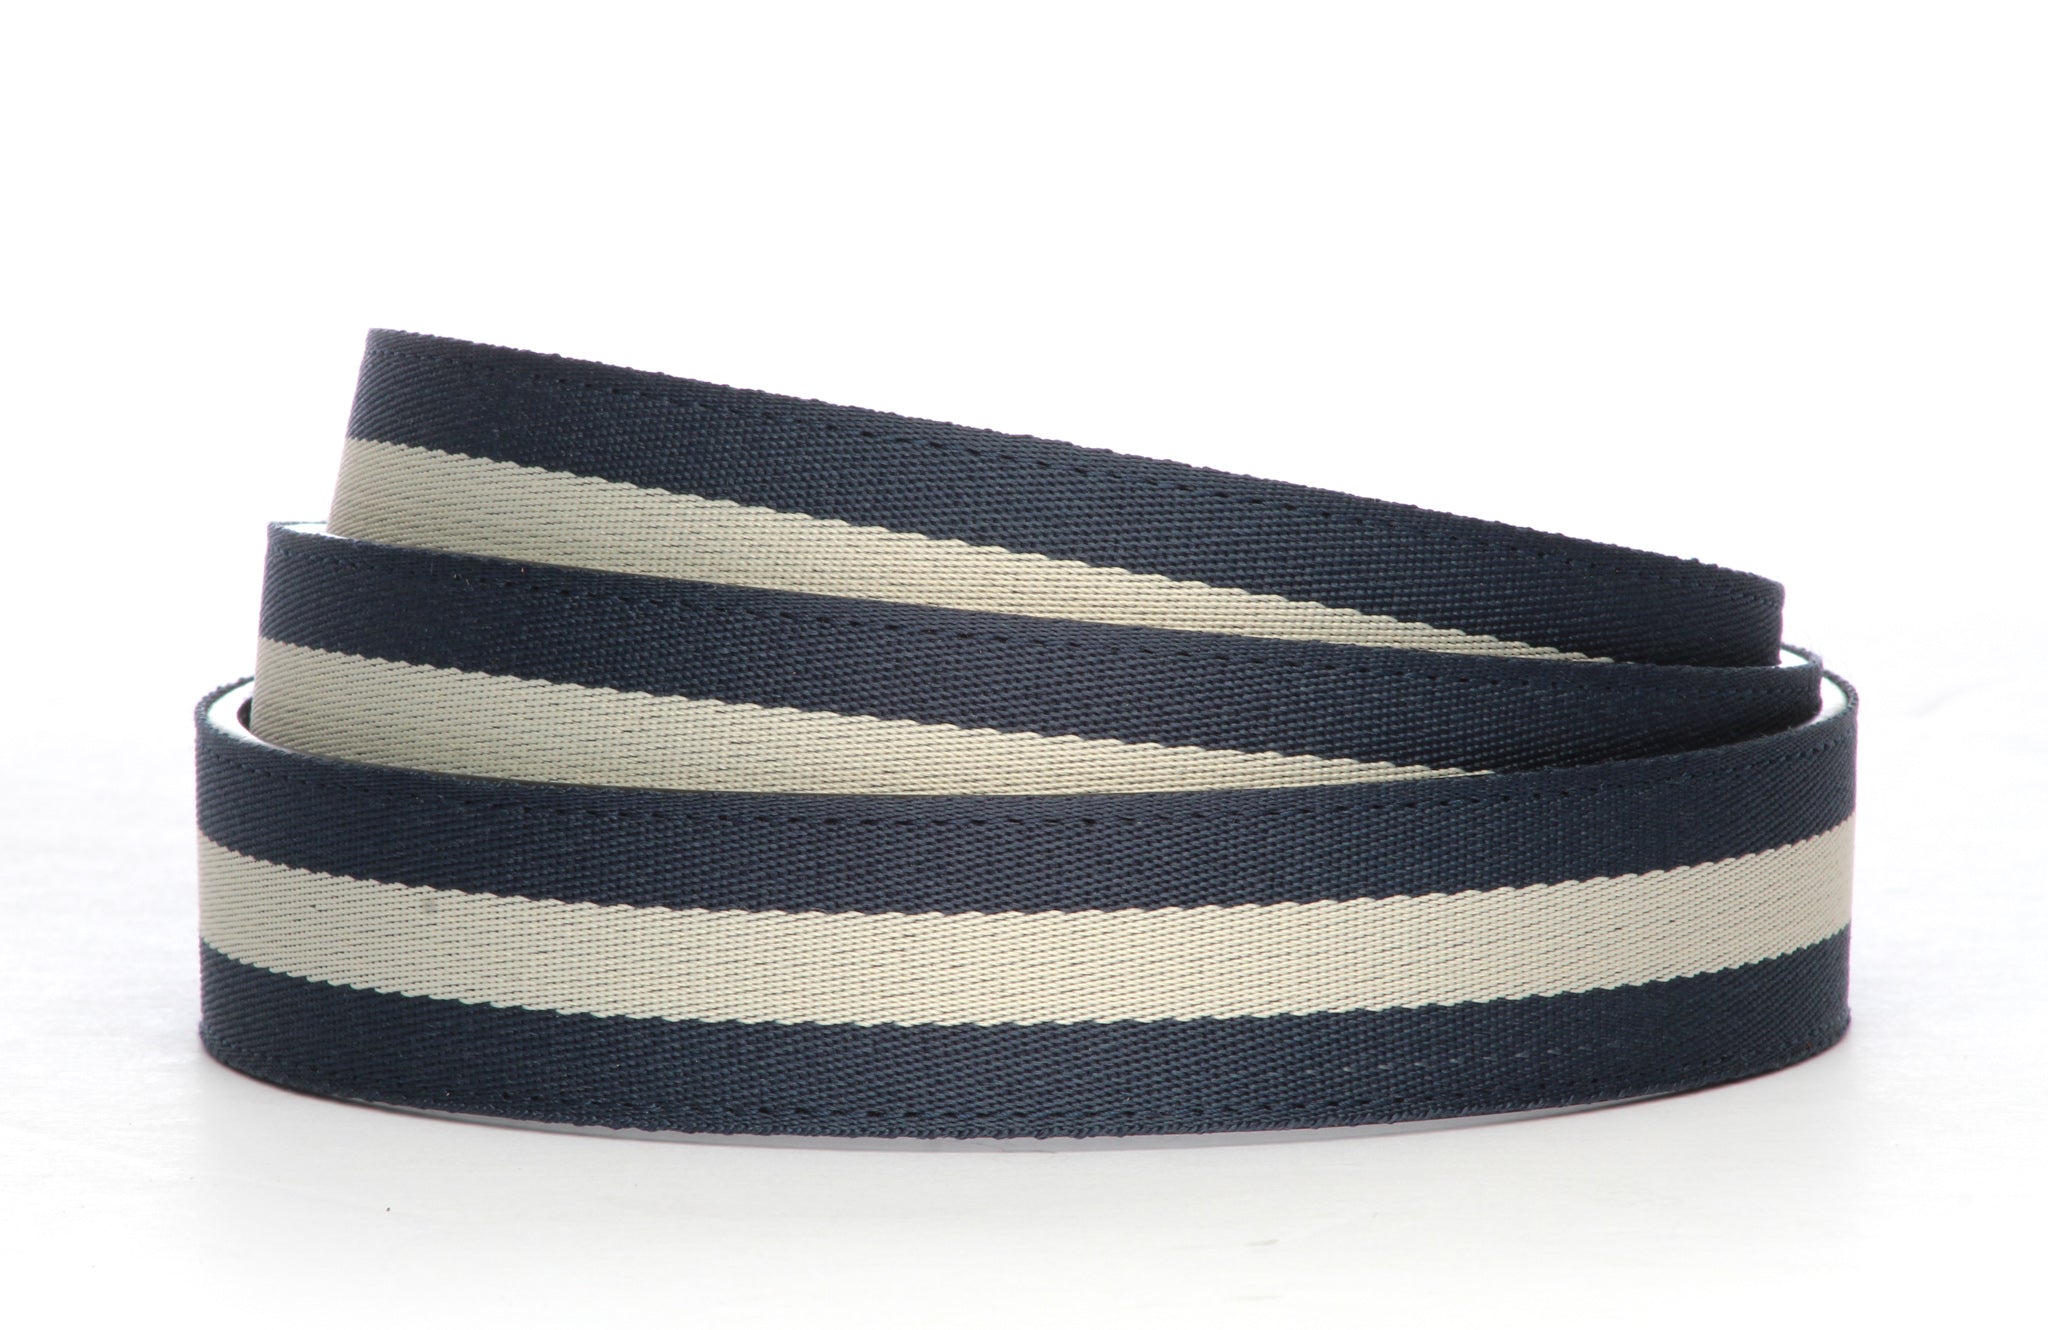 Cloth Belt Strap - Men's Ratchet Belt - Navy-White Stripe, 1.25